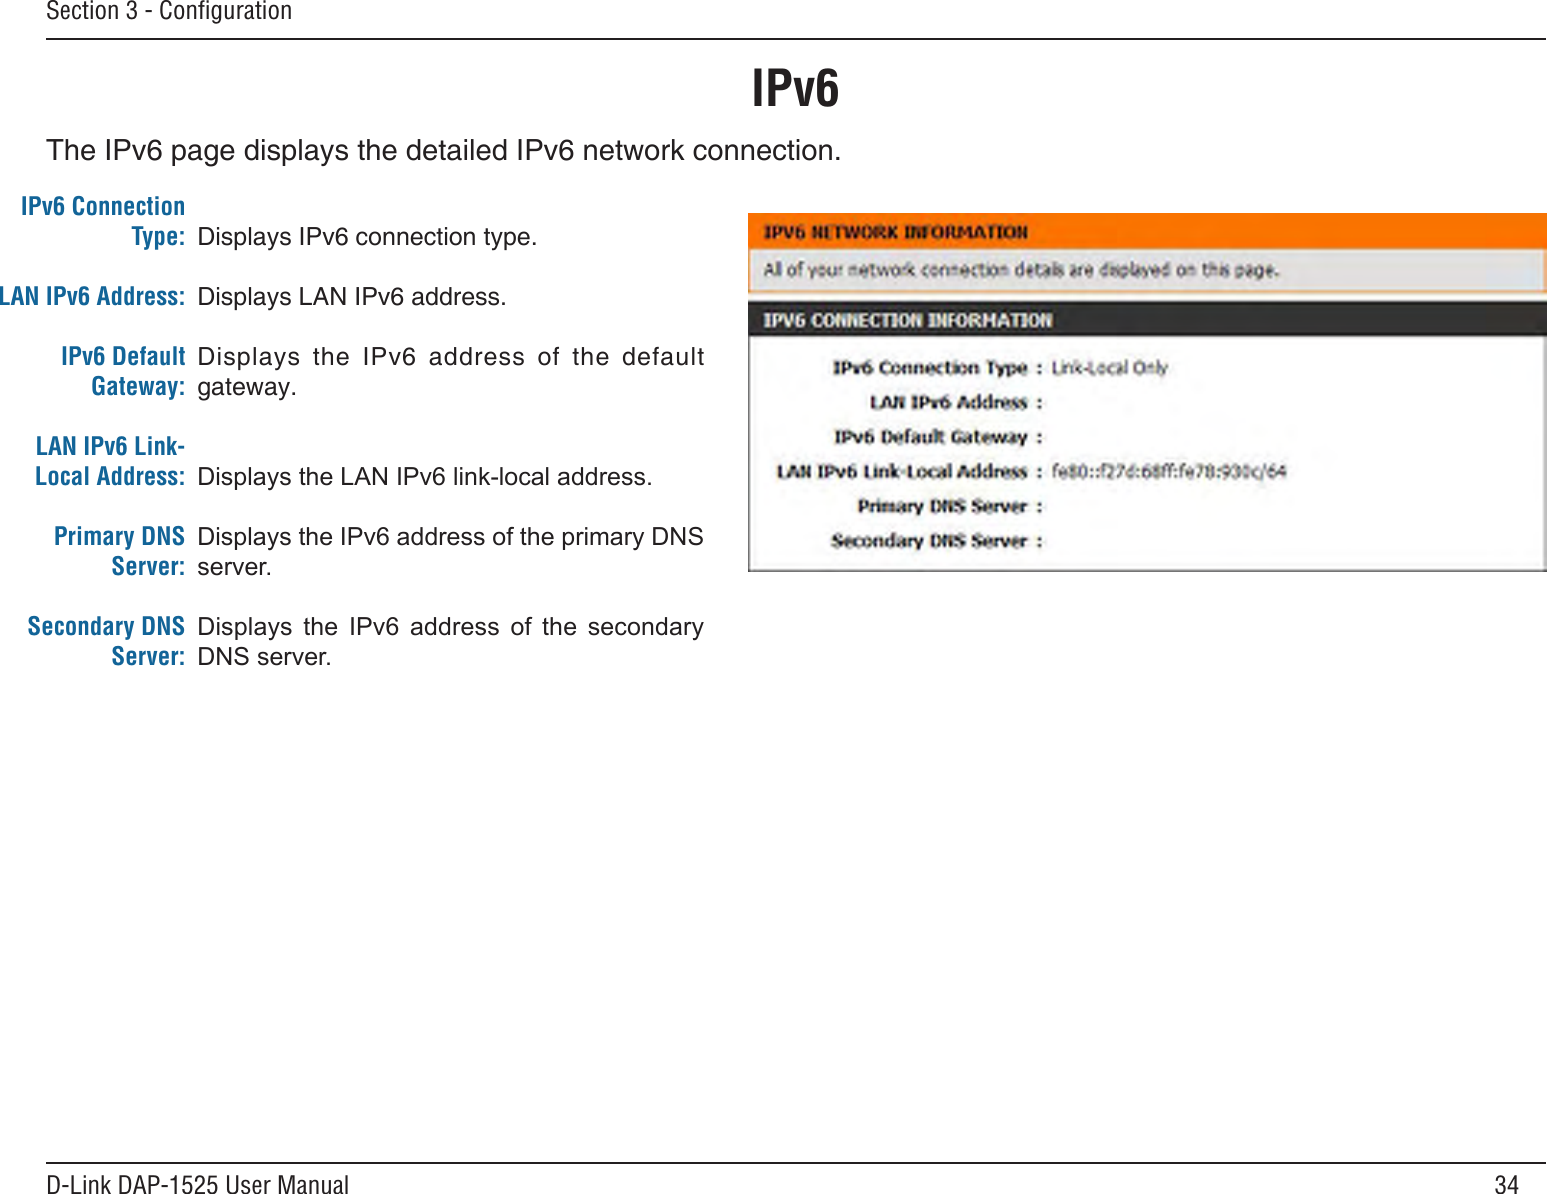 34D-Link DAP-1525 User ManualSection 3 - ConﬁgurationIPv6The IPv6 page displays the detailed IPv6 network connection.IPv6 Connection Type:LAN IPv6 Address:IPv6 Default Gateway:LAN IPv6 Link-Local Address:Primary DNS Server:Secondary DNS Server:Displays IPv6 connection type.Displays LAN IPv6 address.Displays  the  IPv6  address  of  the  default gateway.DisplaystheLANIPv6link-localaddress.DisplaystheIPv6addressoftheprimaryDNSserver.Displays the IPv6 address of the secondaryDNSserver.